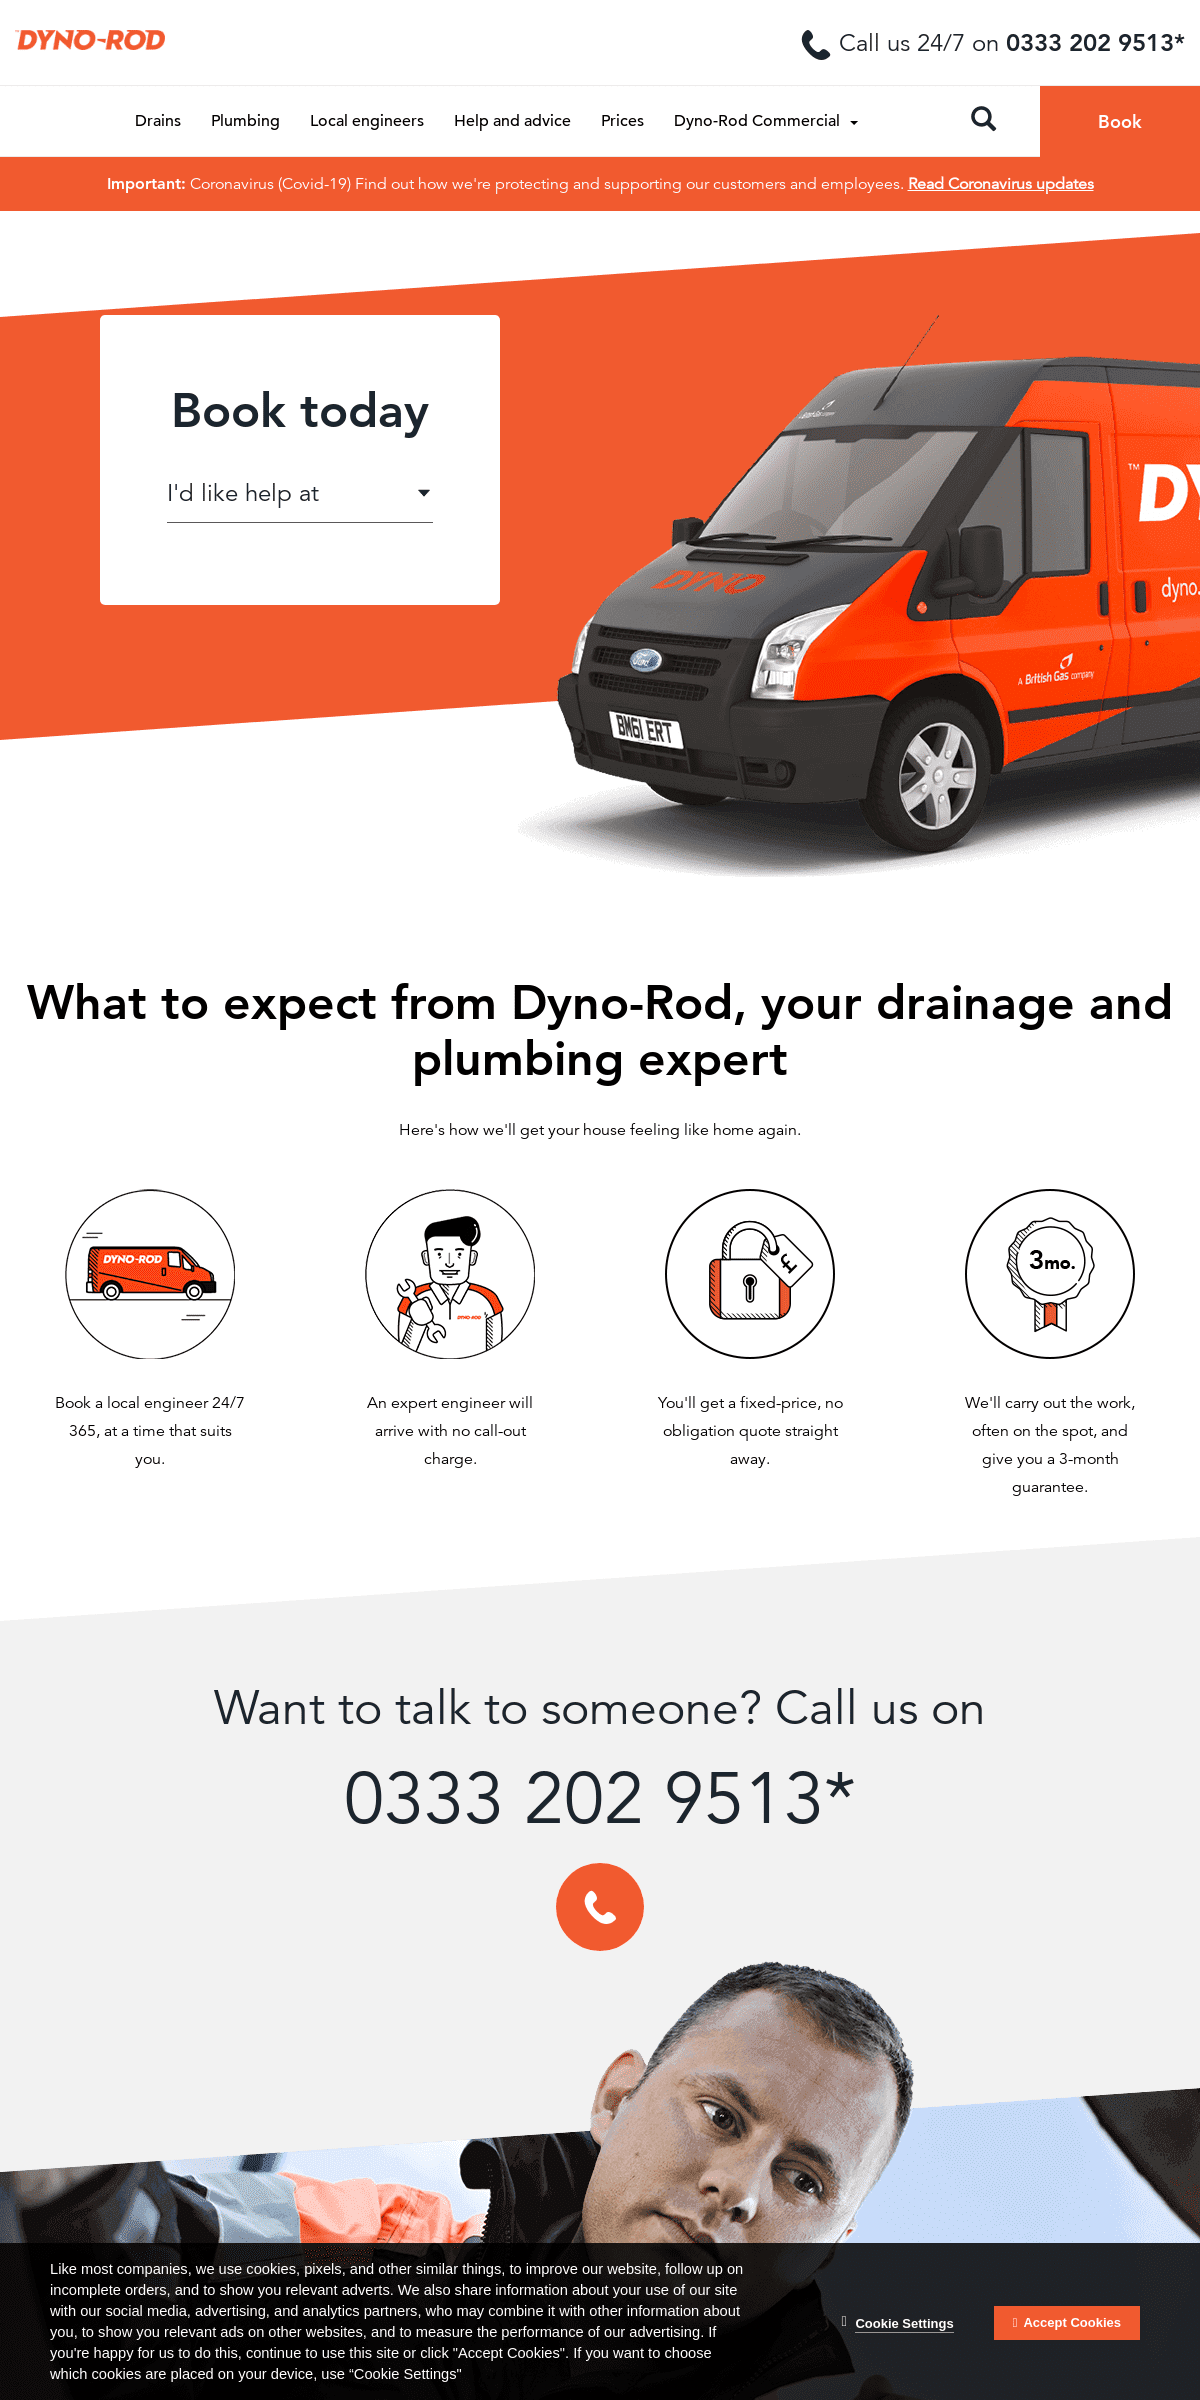 A complete backup of dyno.com